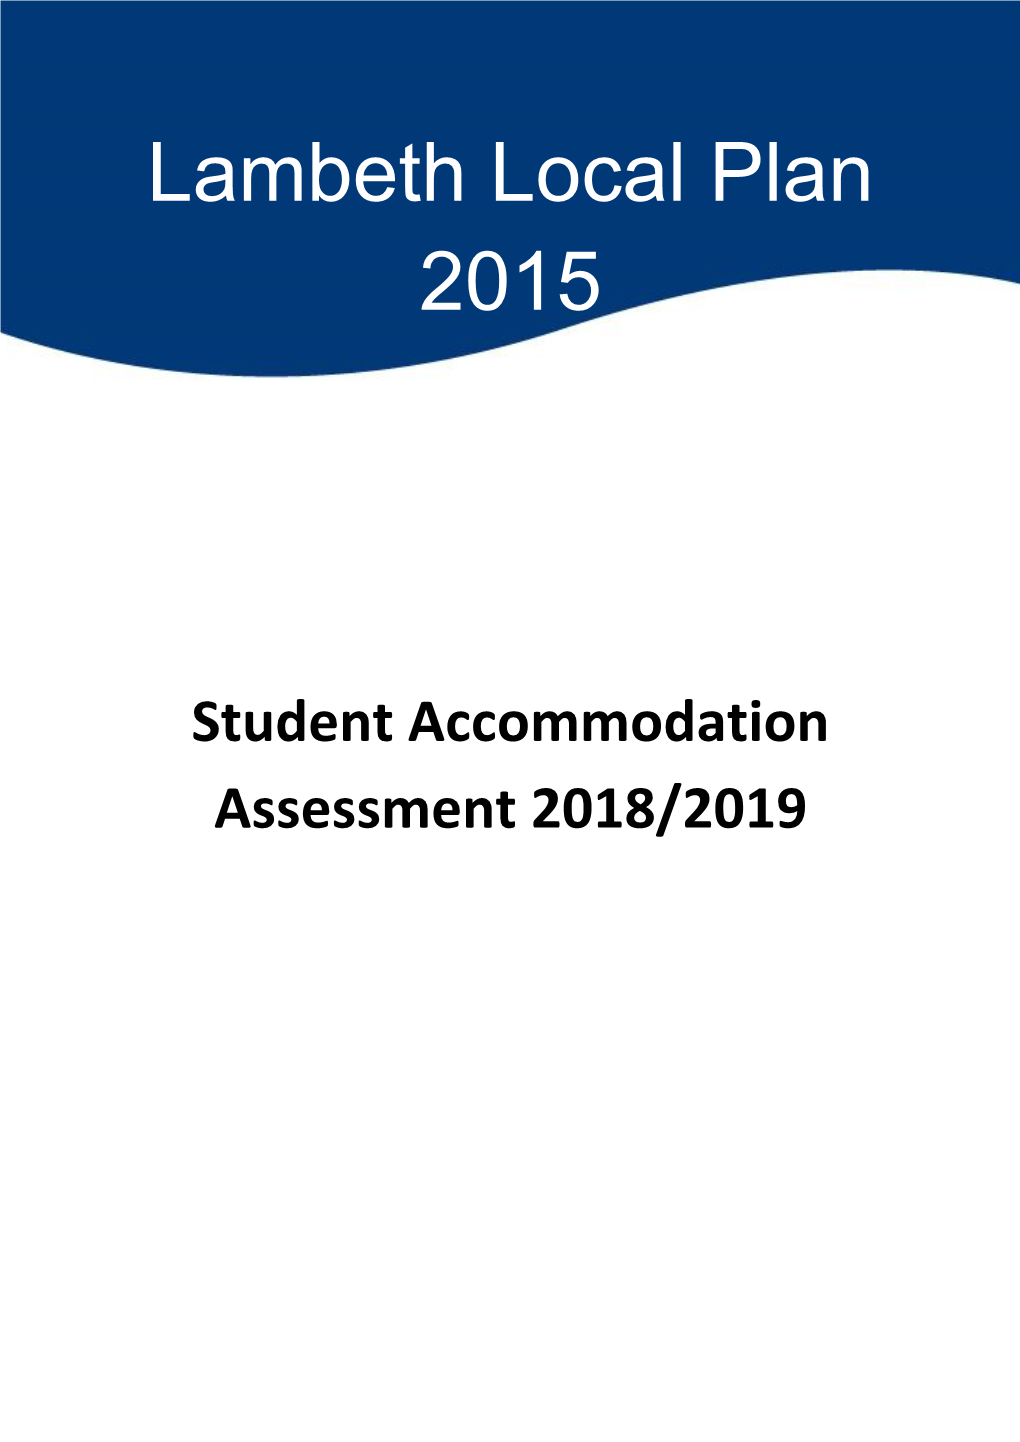 Student Accommodation Assessment 2018/2019